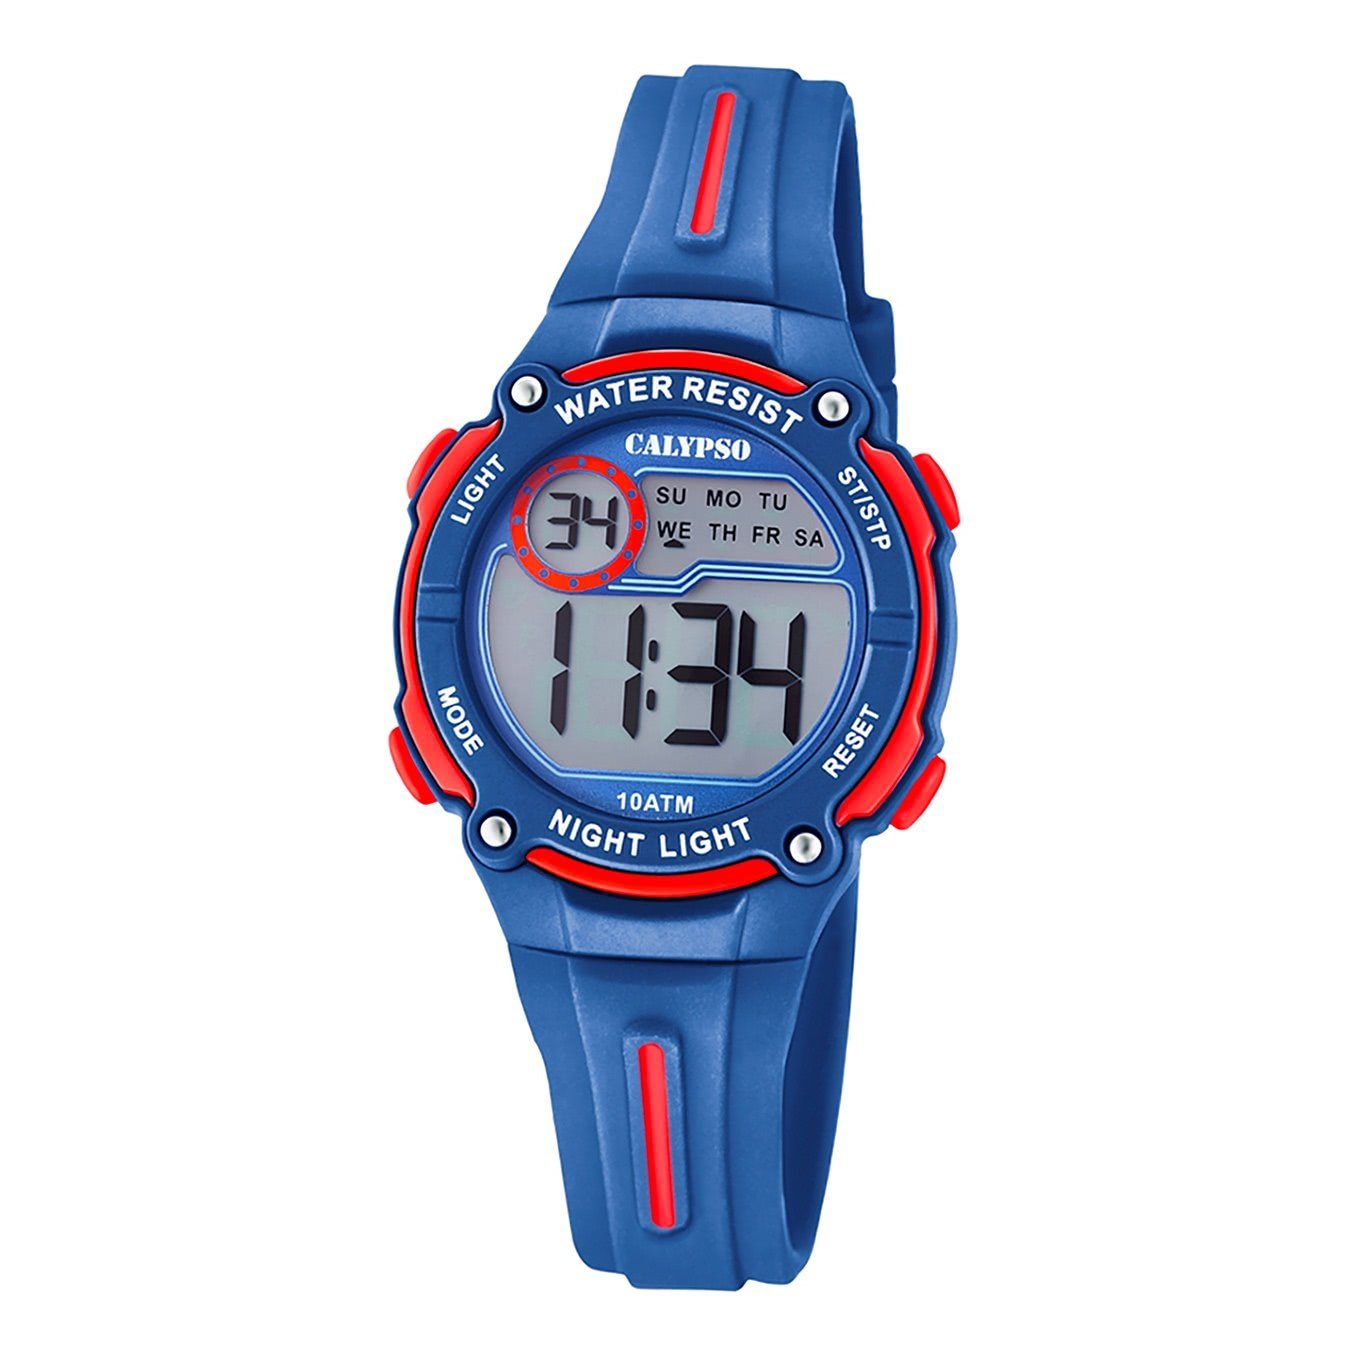 CALYPSO WATCHES Digitaluhr Calypso Kinder K6068/4 Uhr Armbanduhr Kinder Fashion Kunststoffband, PURarmband rund, dunkelblau, Kunststoff